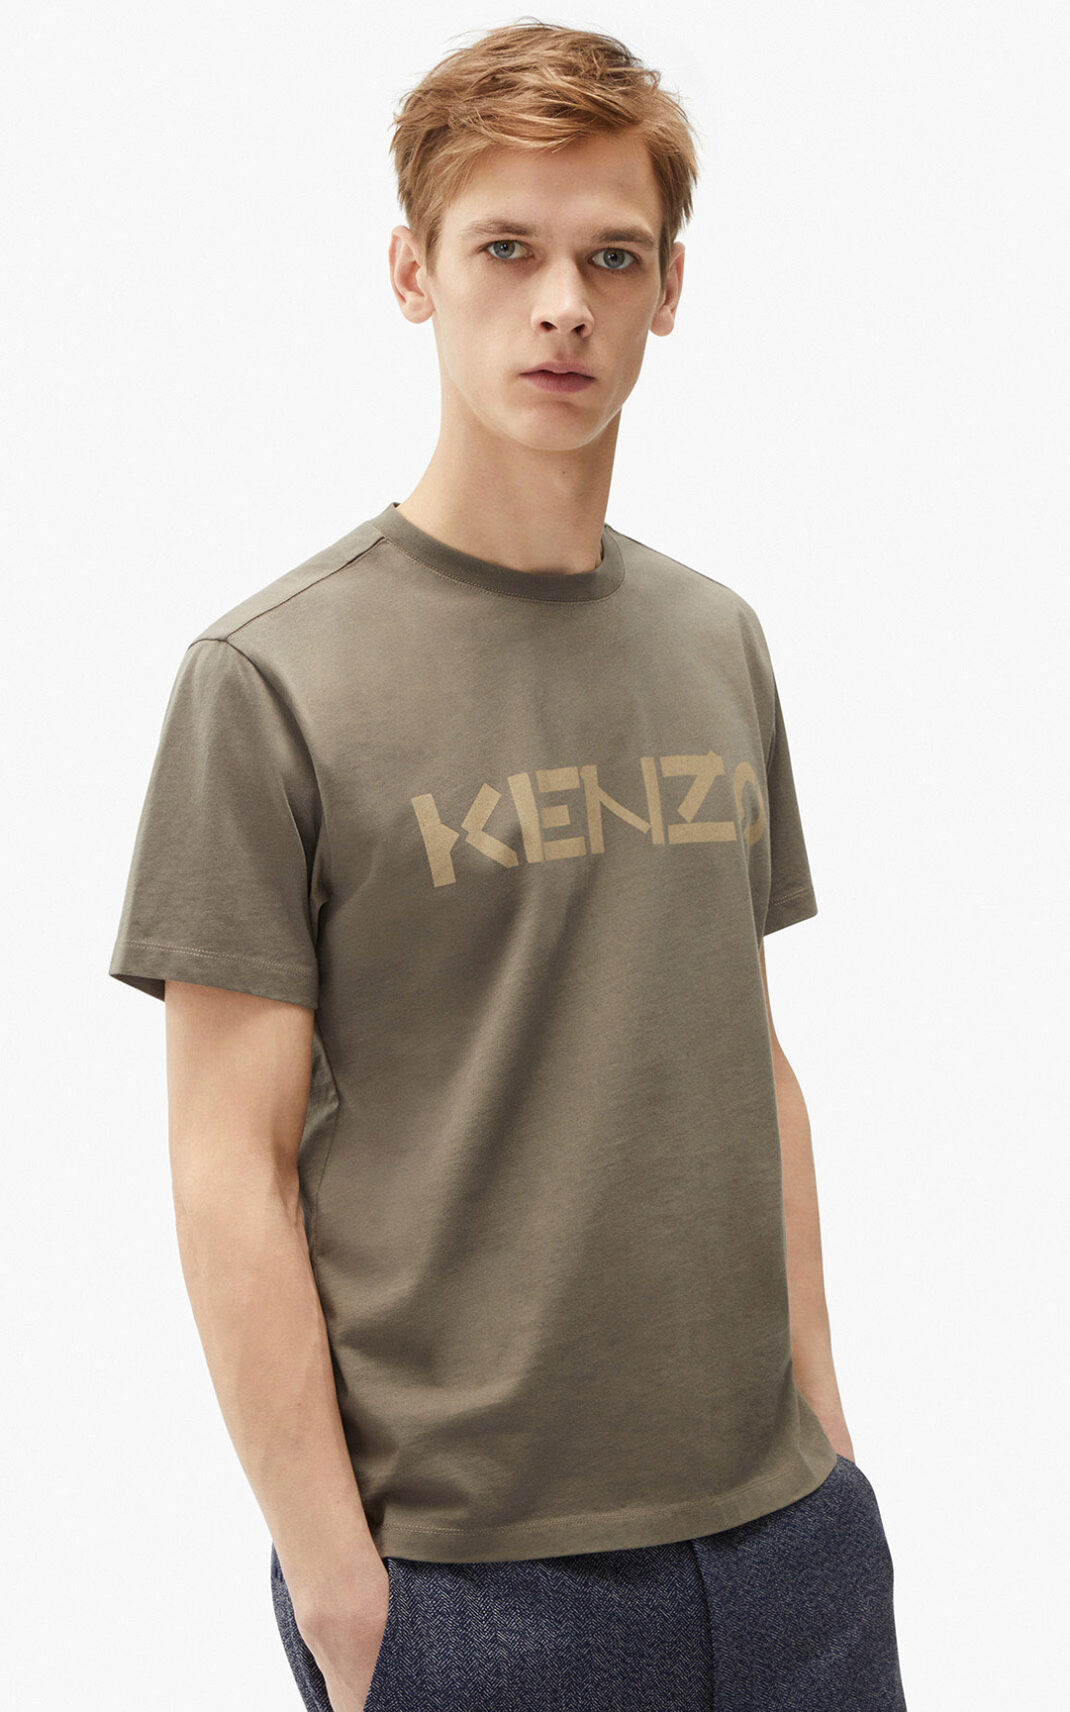 Kenzo Logo Tシャツ メンズ ライトグレー - UIFLBW915